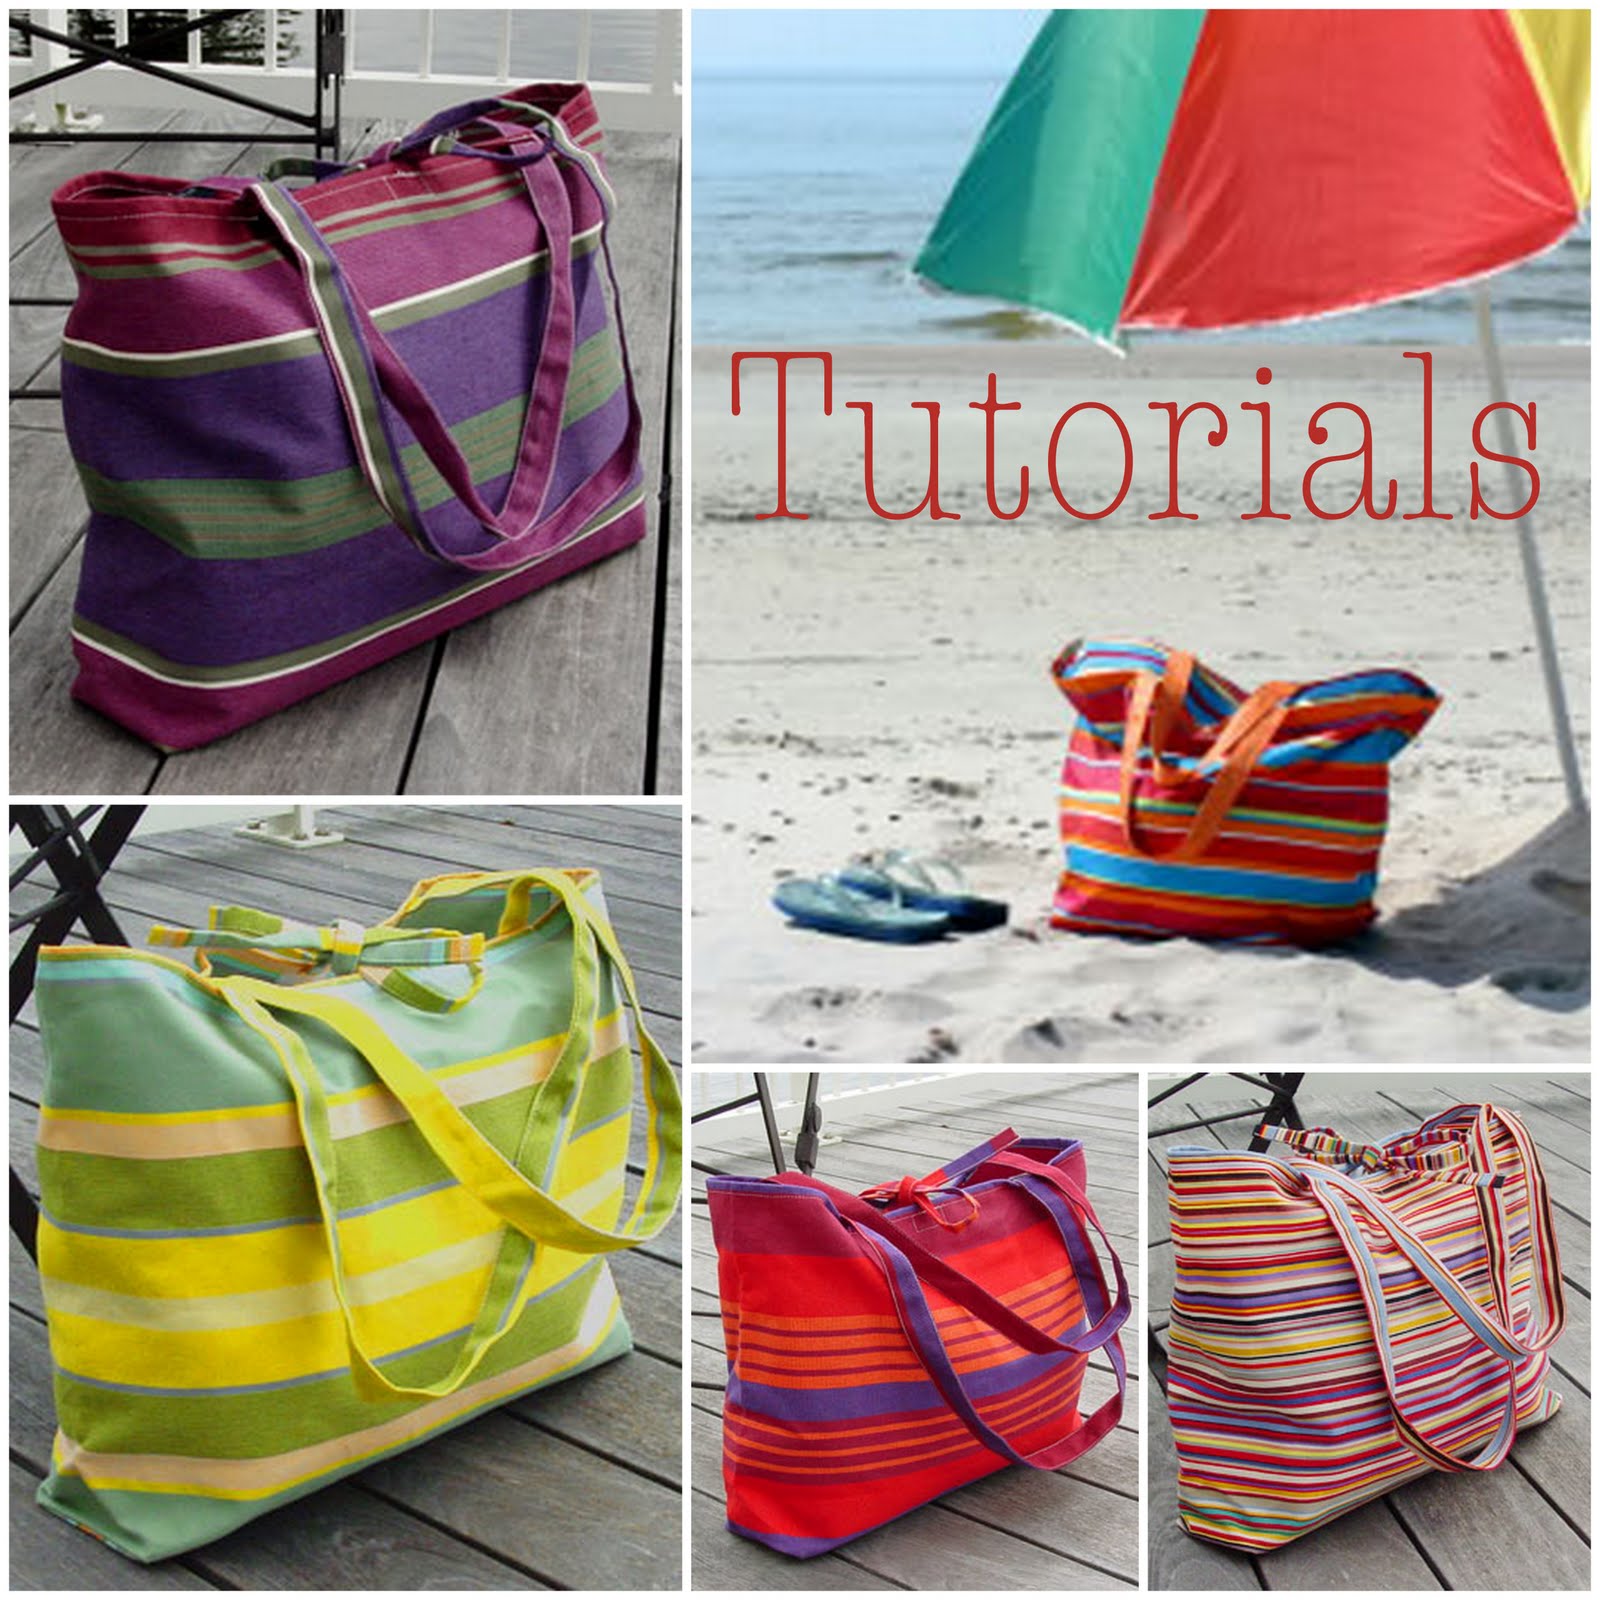 ... beach bag tutorial by dizzytina pleated tote beach bag tutorial